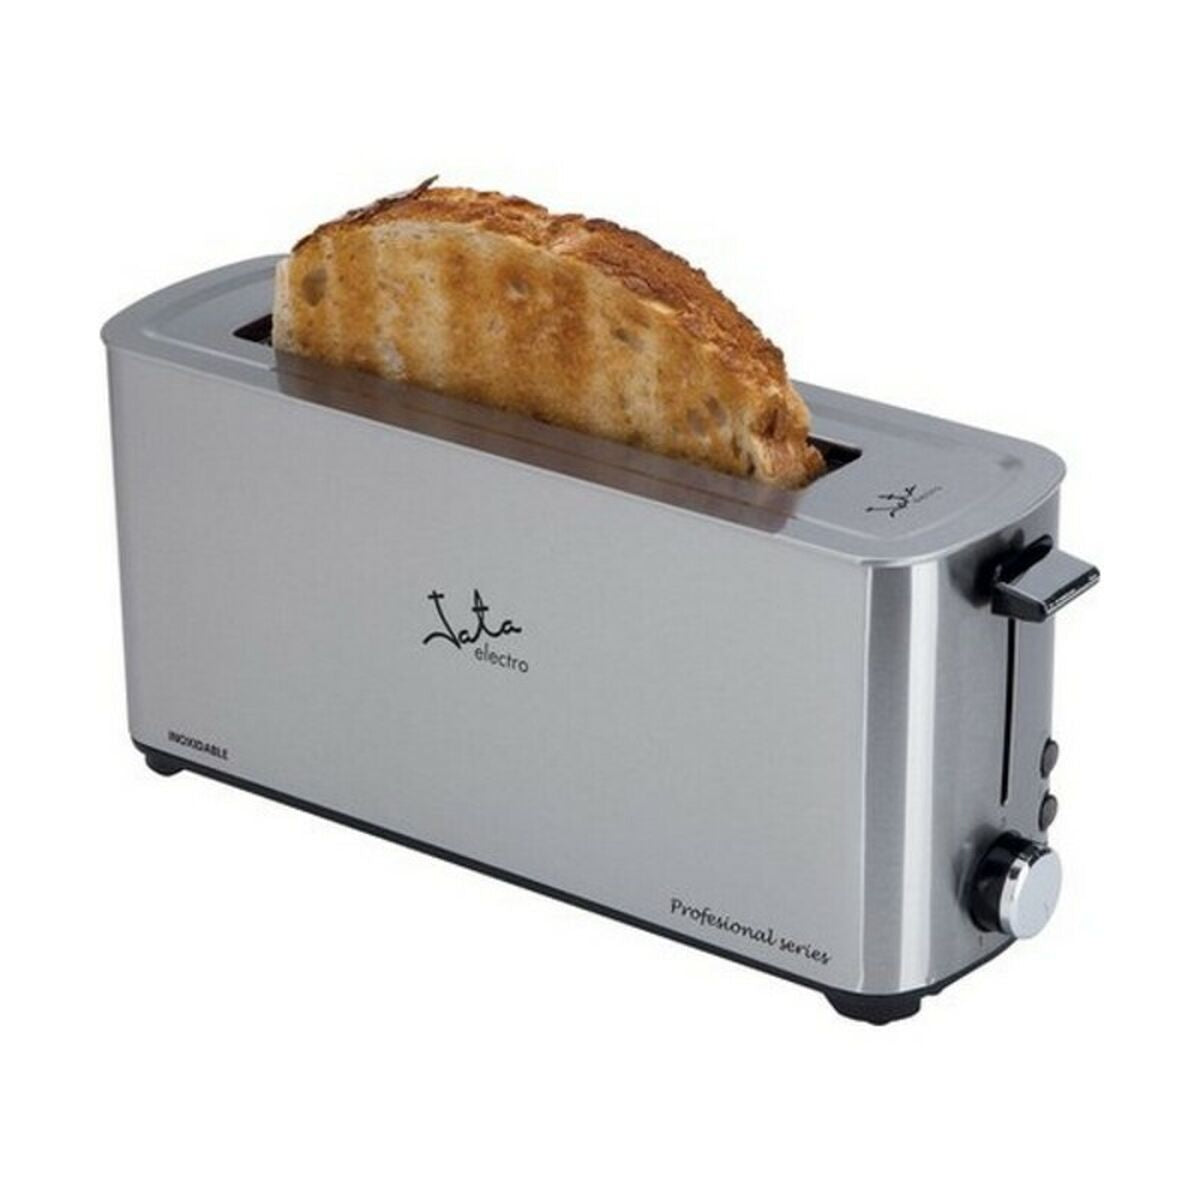 Toaster JATA 1000 W - CA International 